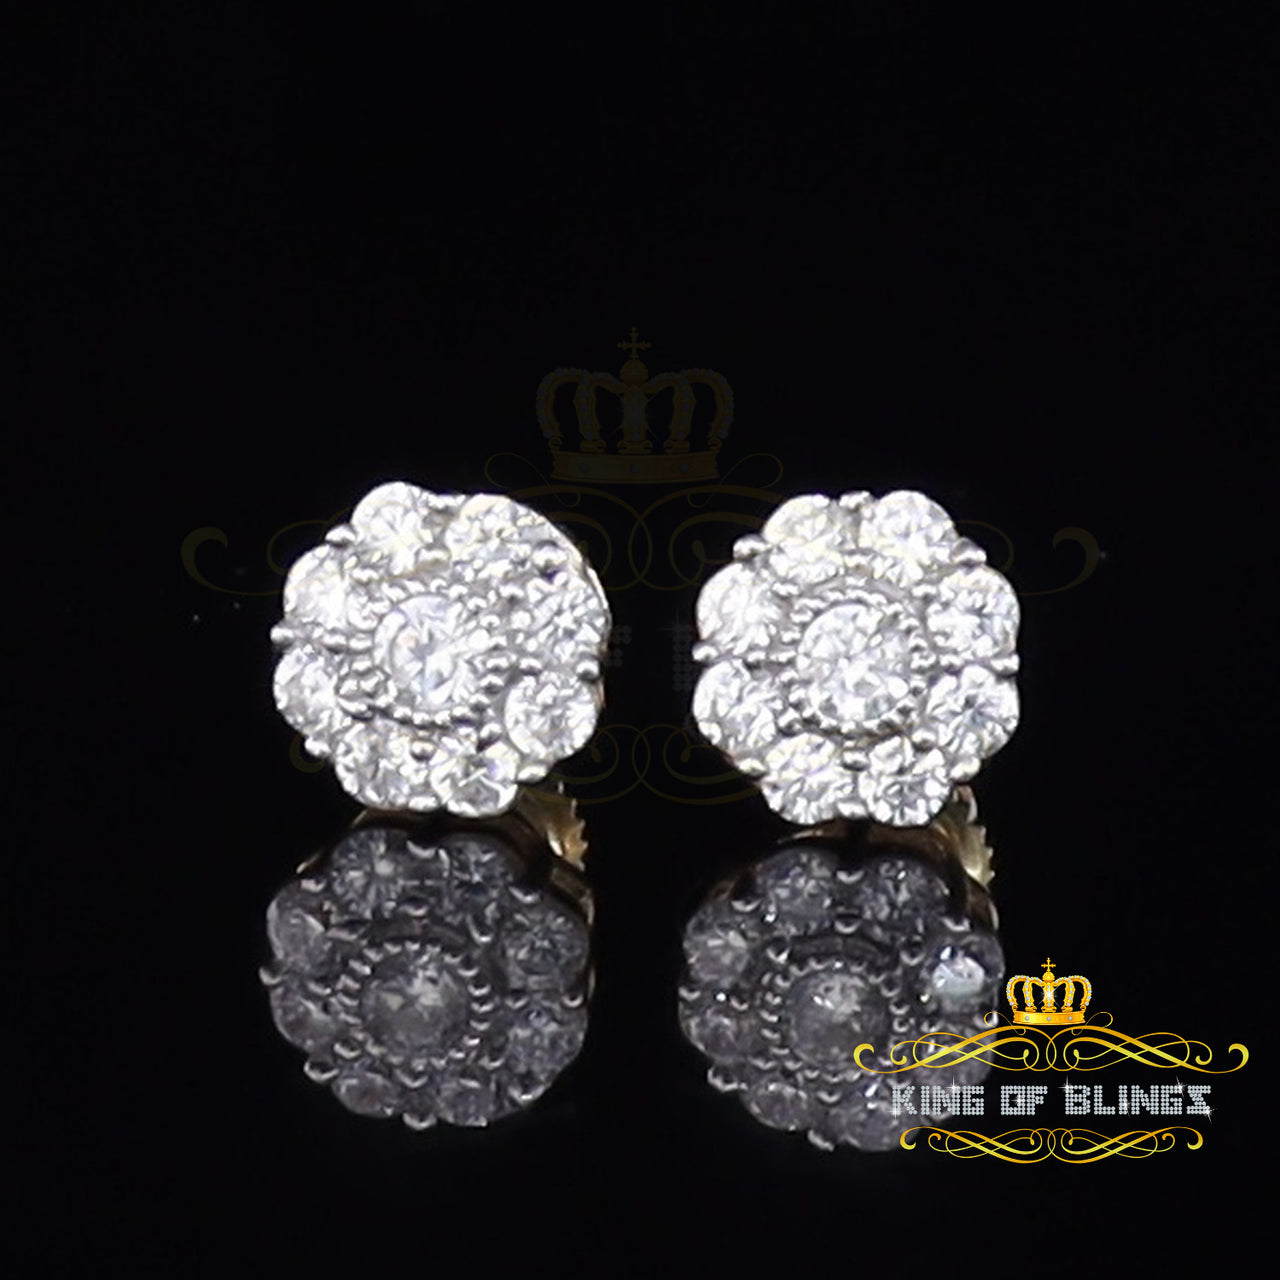 King of Bling's 925 Yellow Sterling Silver 1.18ct Cubic Zirconia Women's Hip Hop Flower Earrings